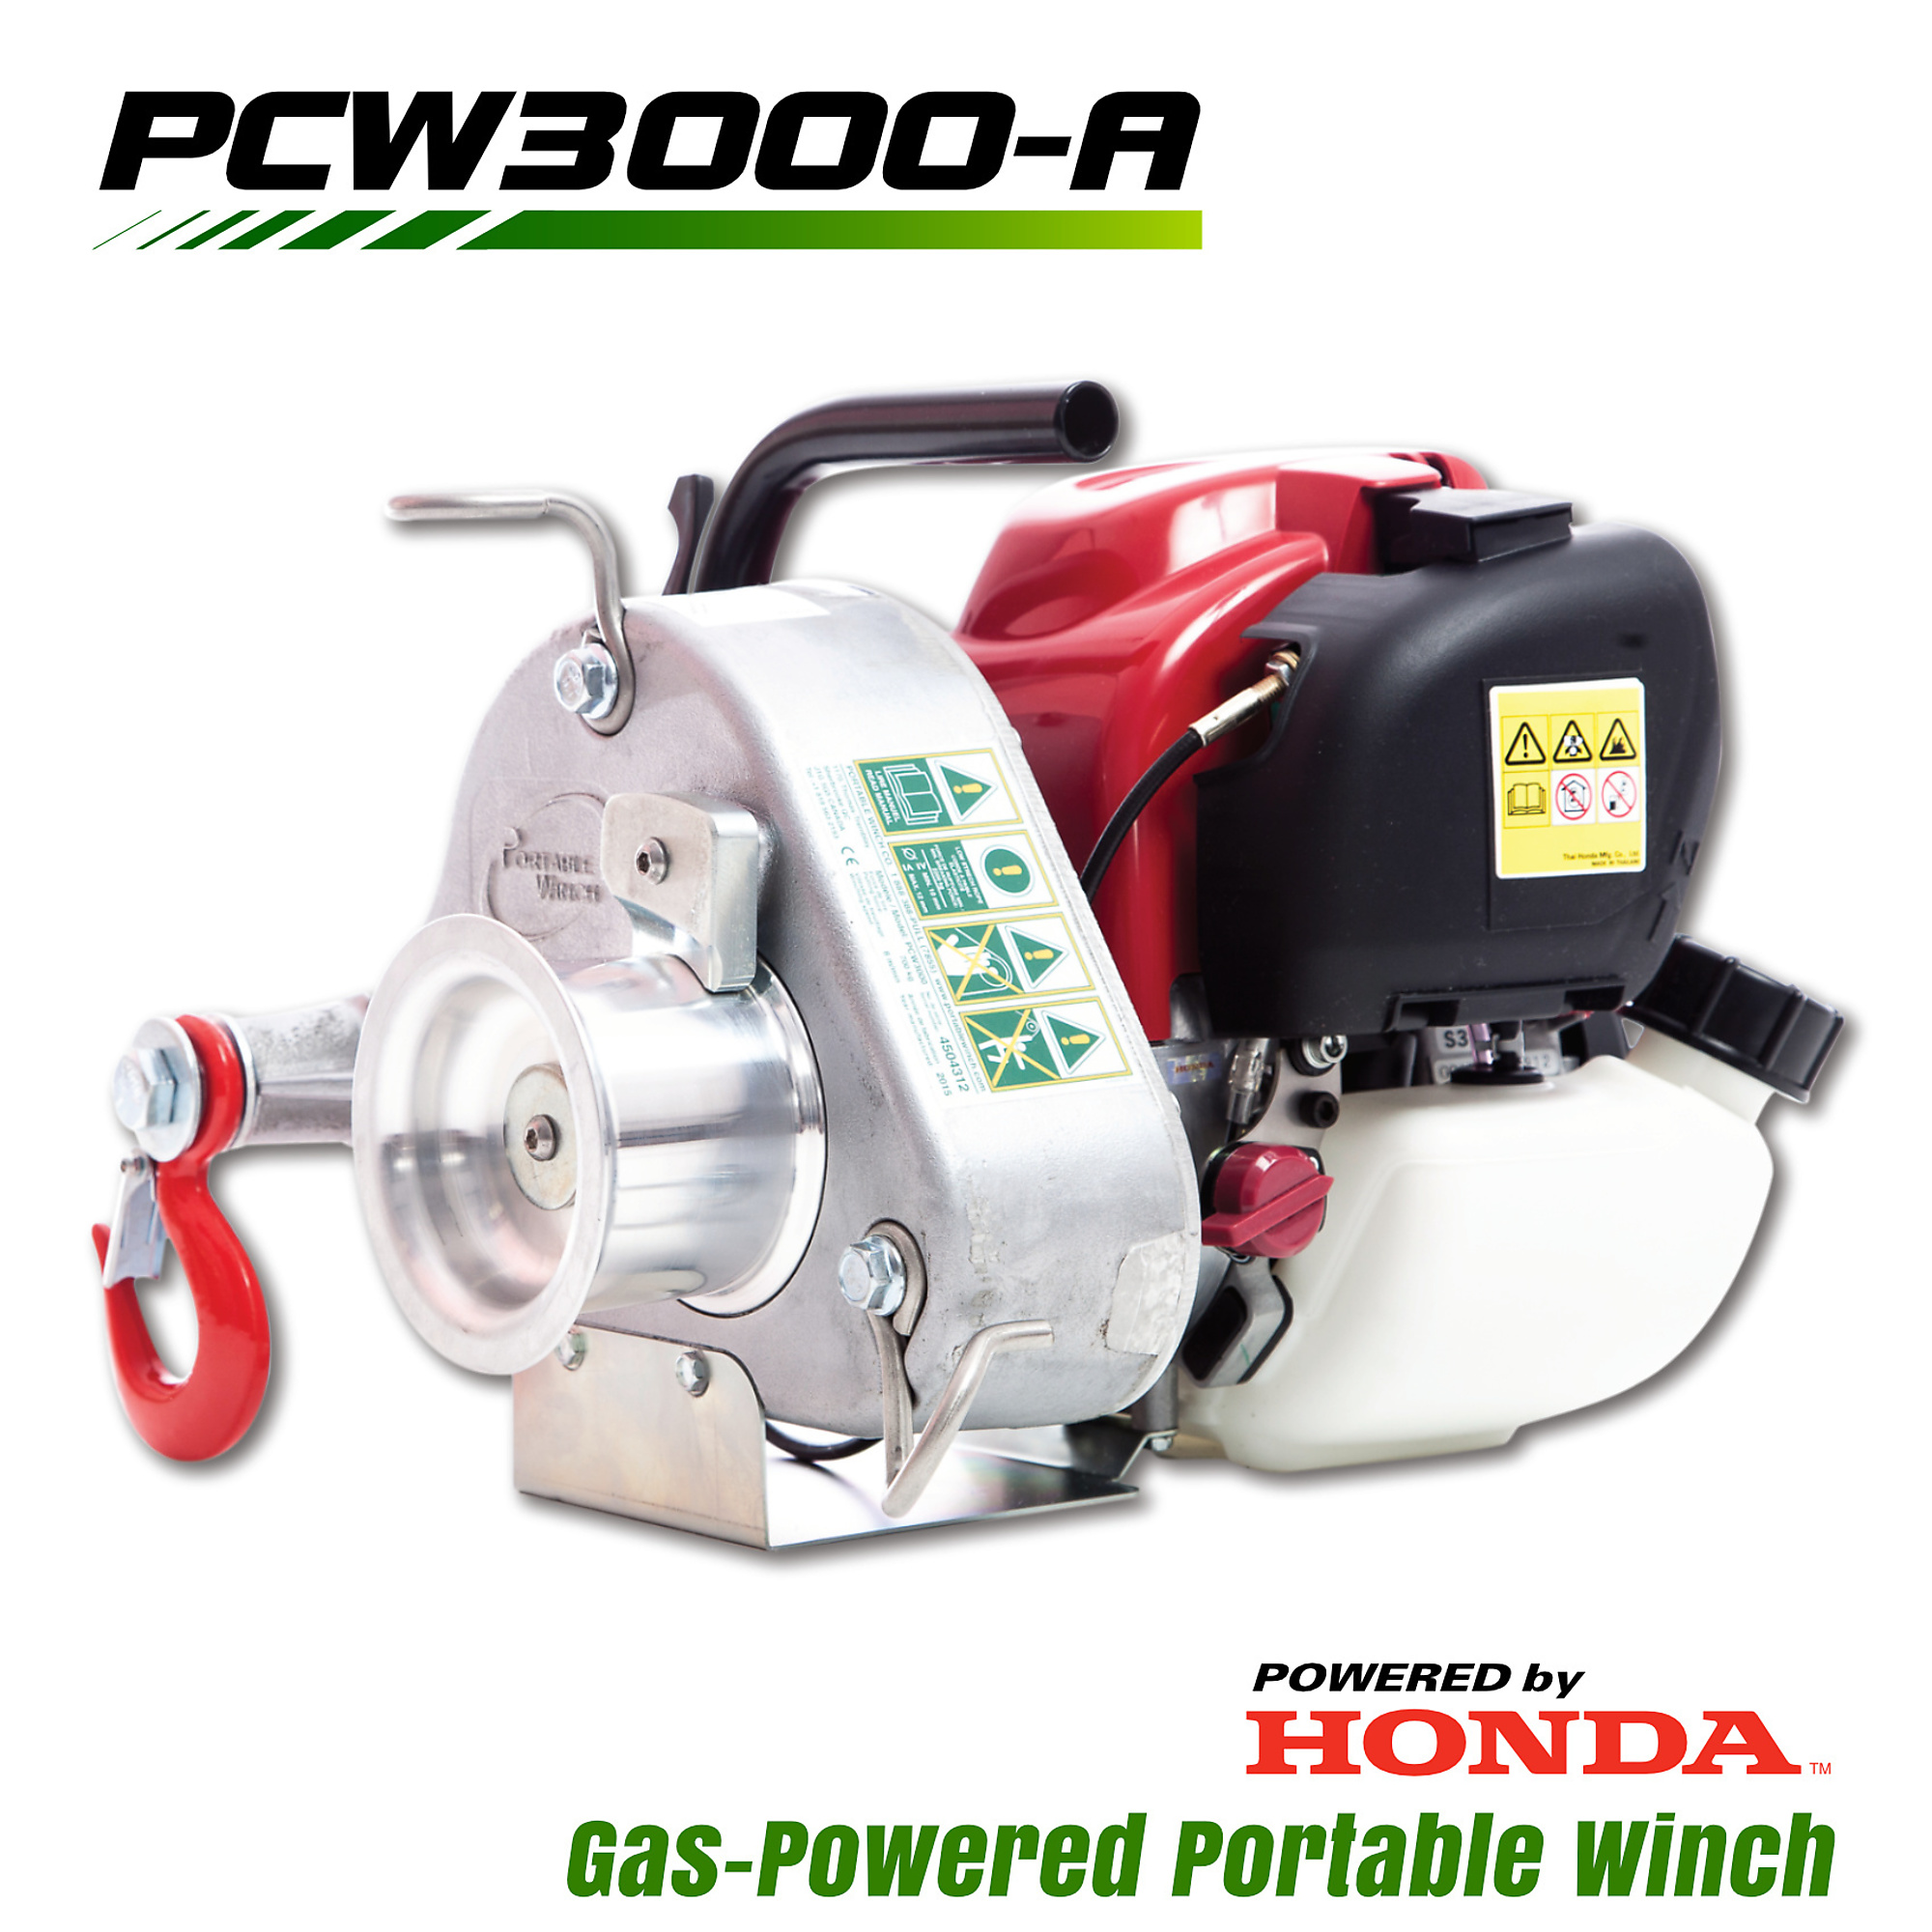 Portable Winch, Gas Pulling Winch Accessories - Honda GX35 Capacity (Line Pull) 1600 lb, Model PCW3000-A